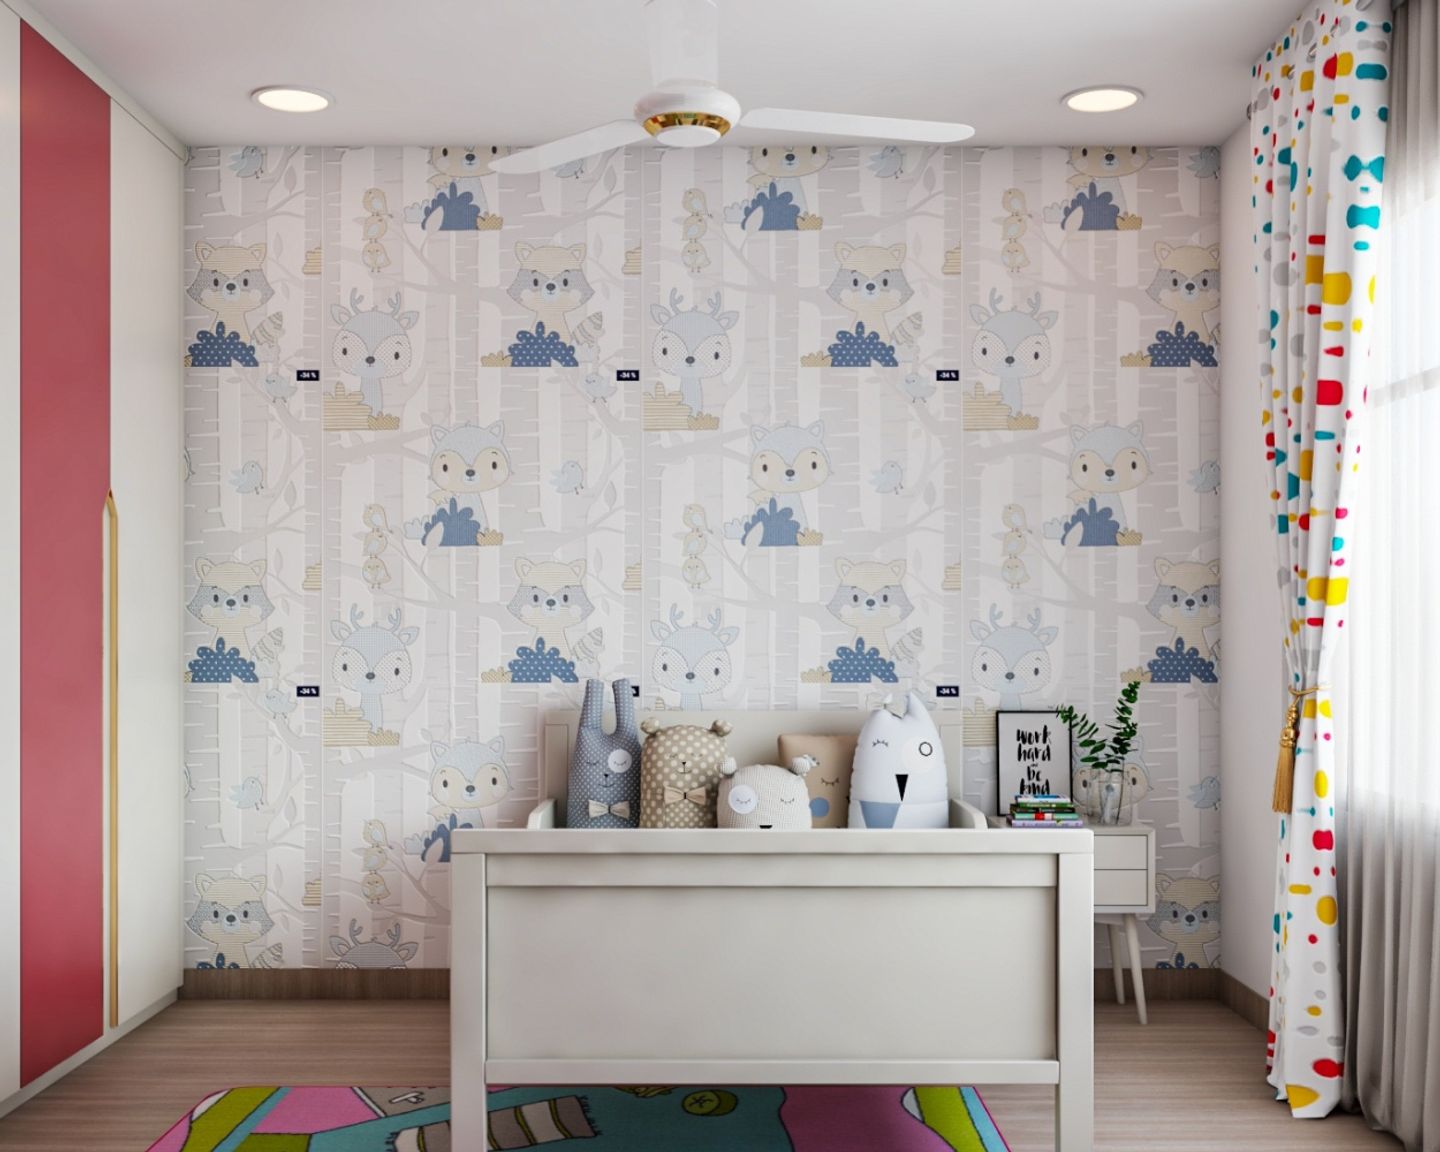 Durable Animal-Patterned Wallpaper Design For Kids' Rooms - Livspace